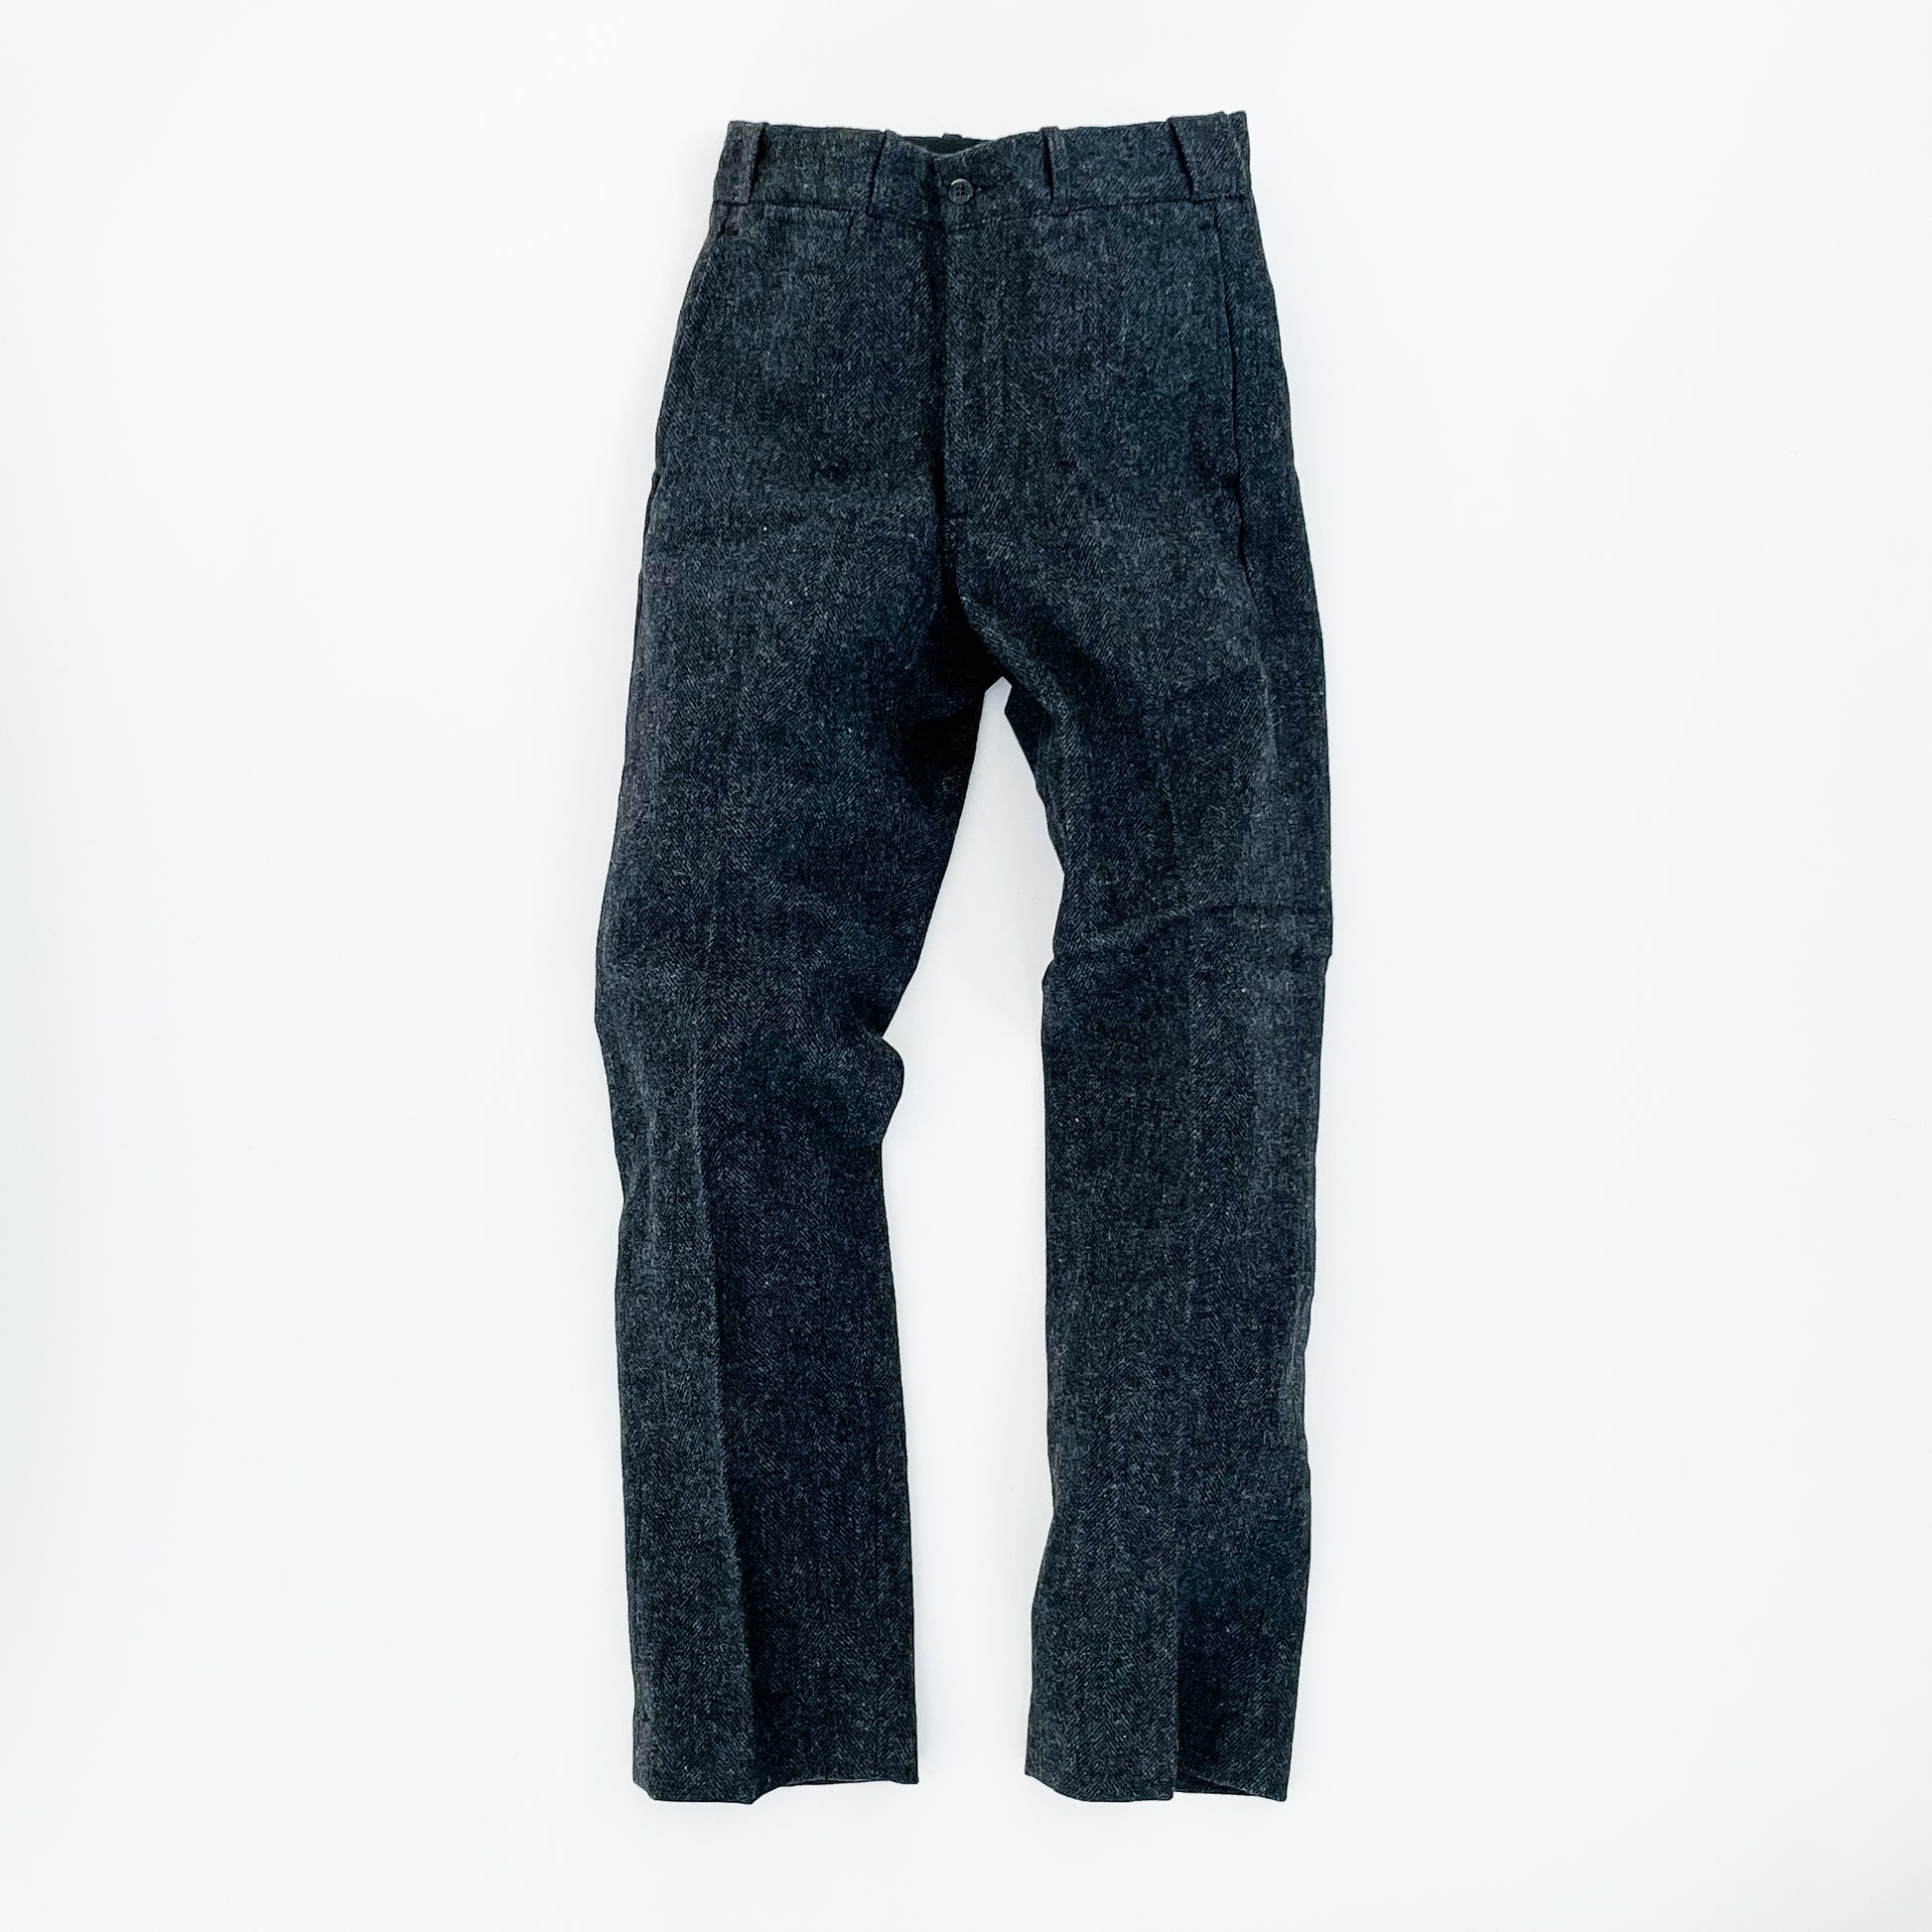 Traditional Wool Pants - Gray Herringbone – Johnson Woolen Mills